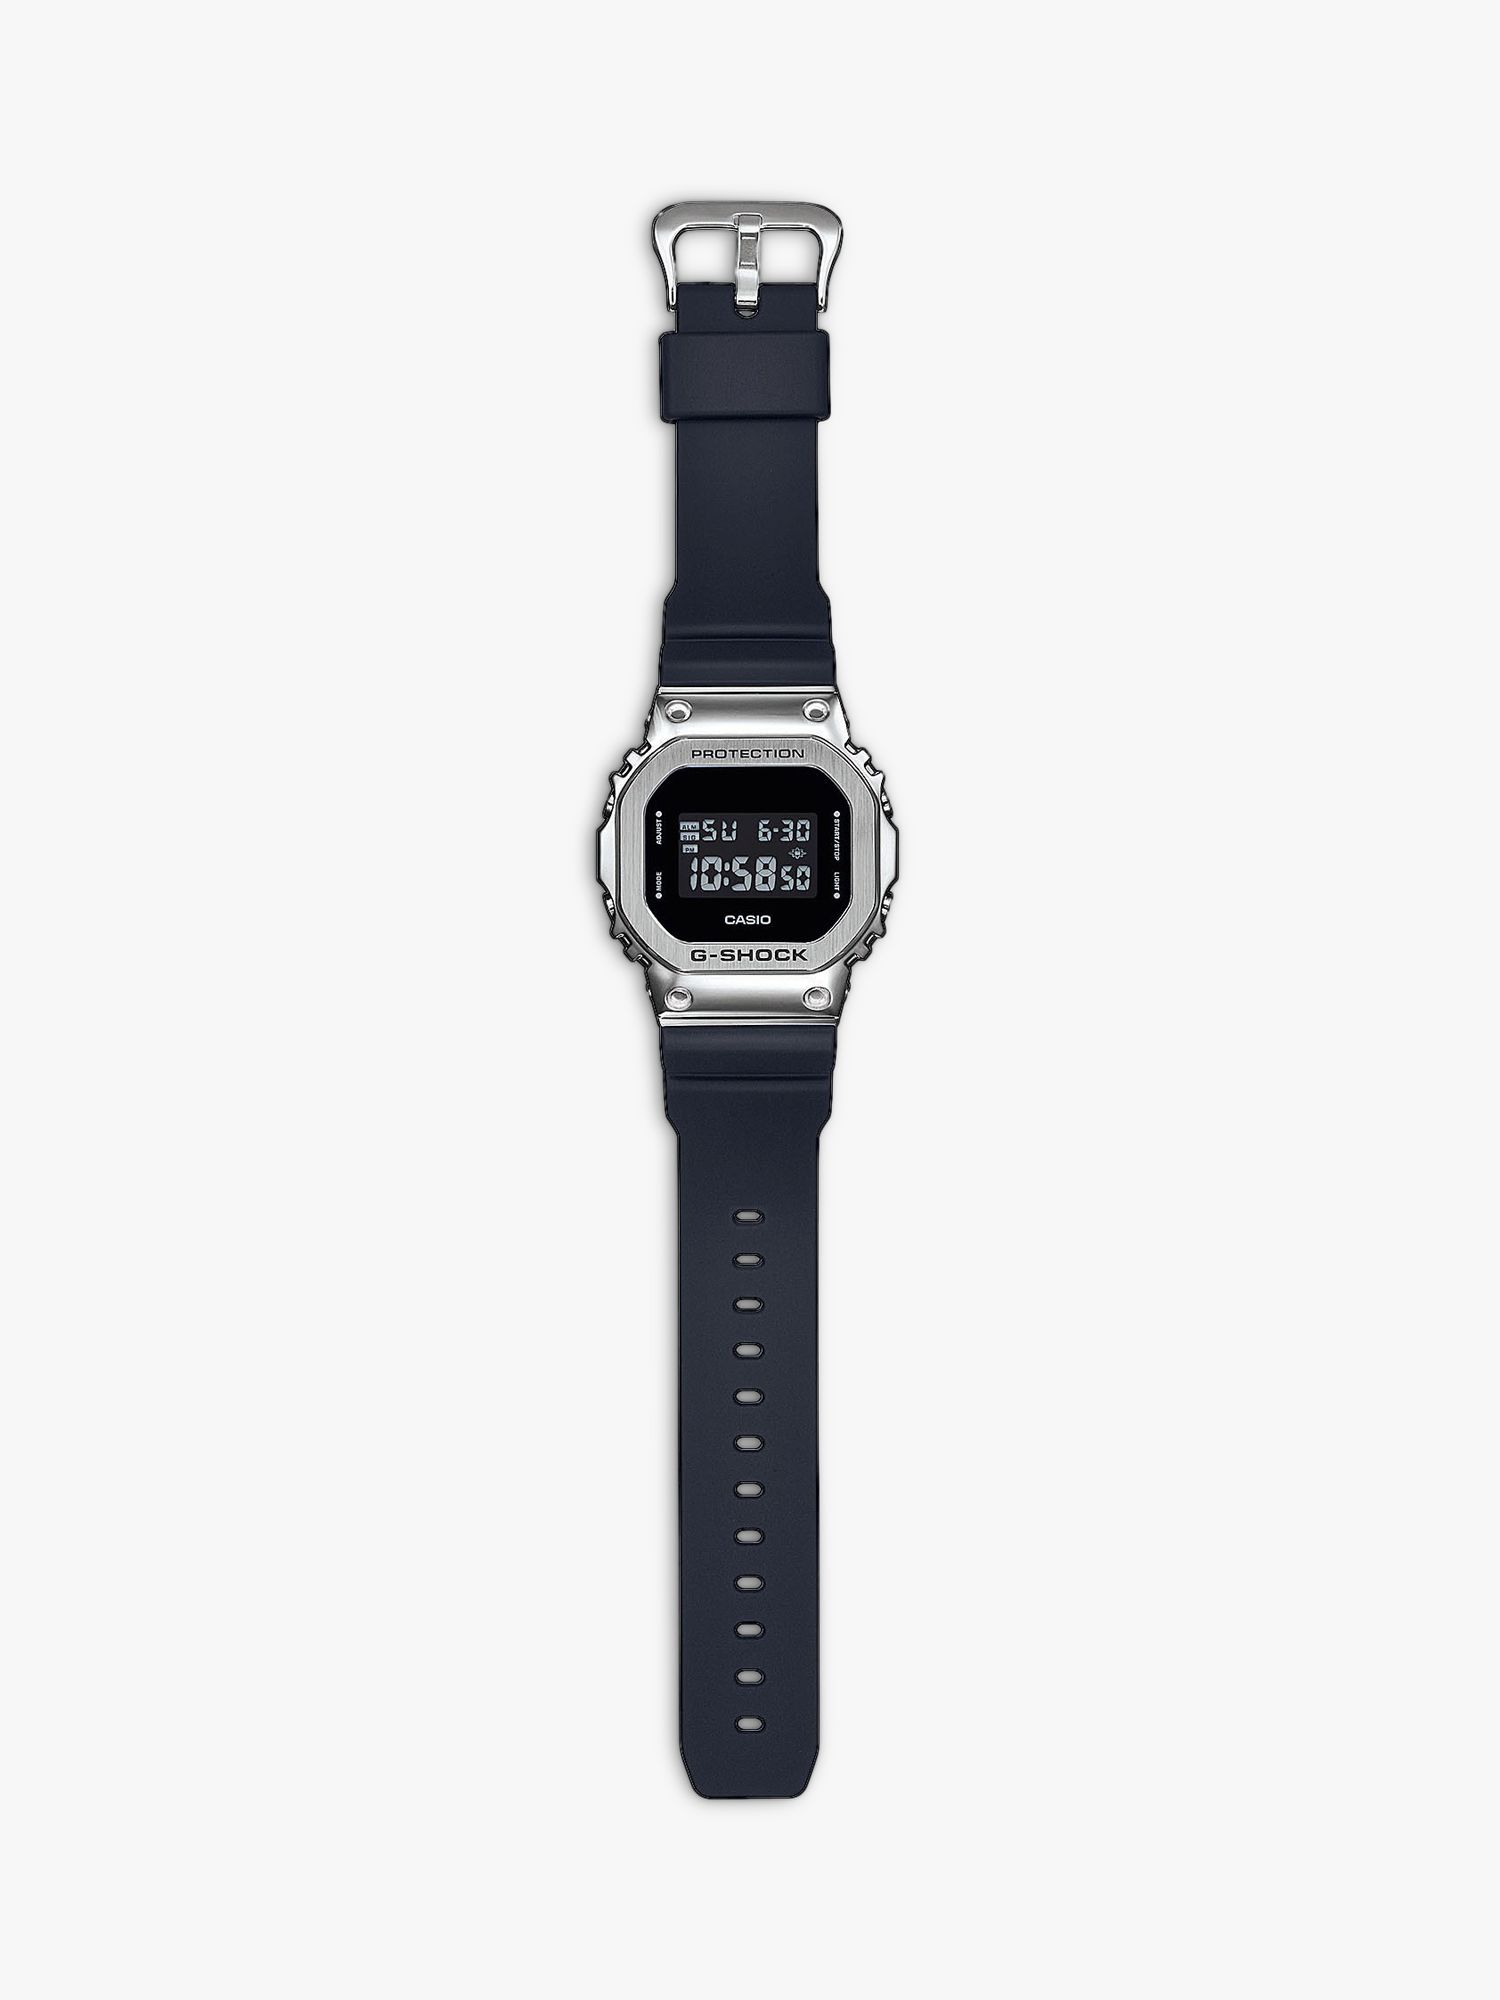 Casio GM-5600U-1ER Men's G-SHOCK Steel Case Digital Resin Strap Watch, Black